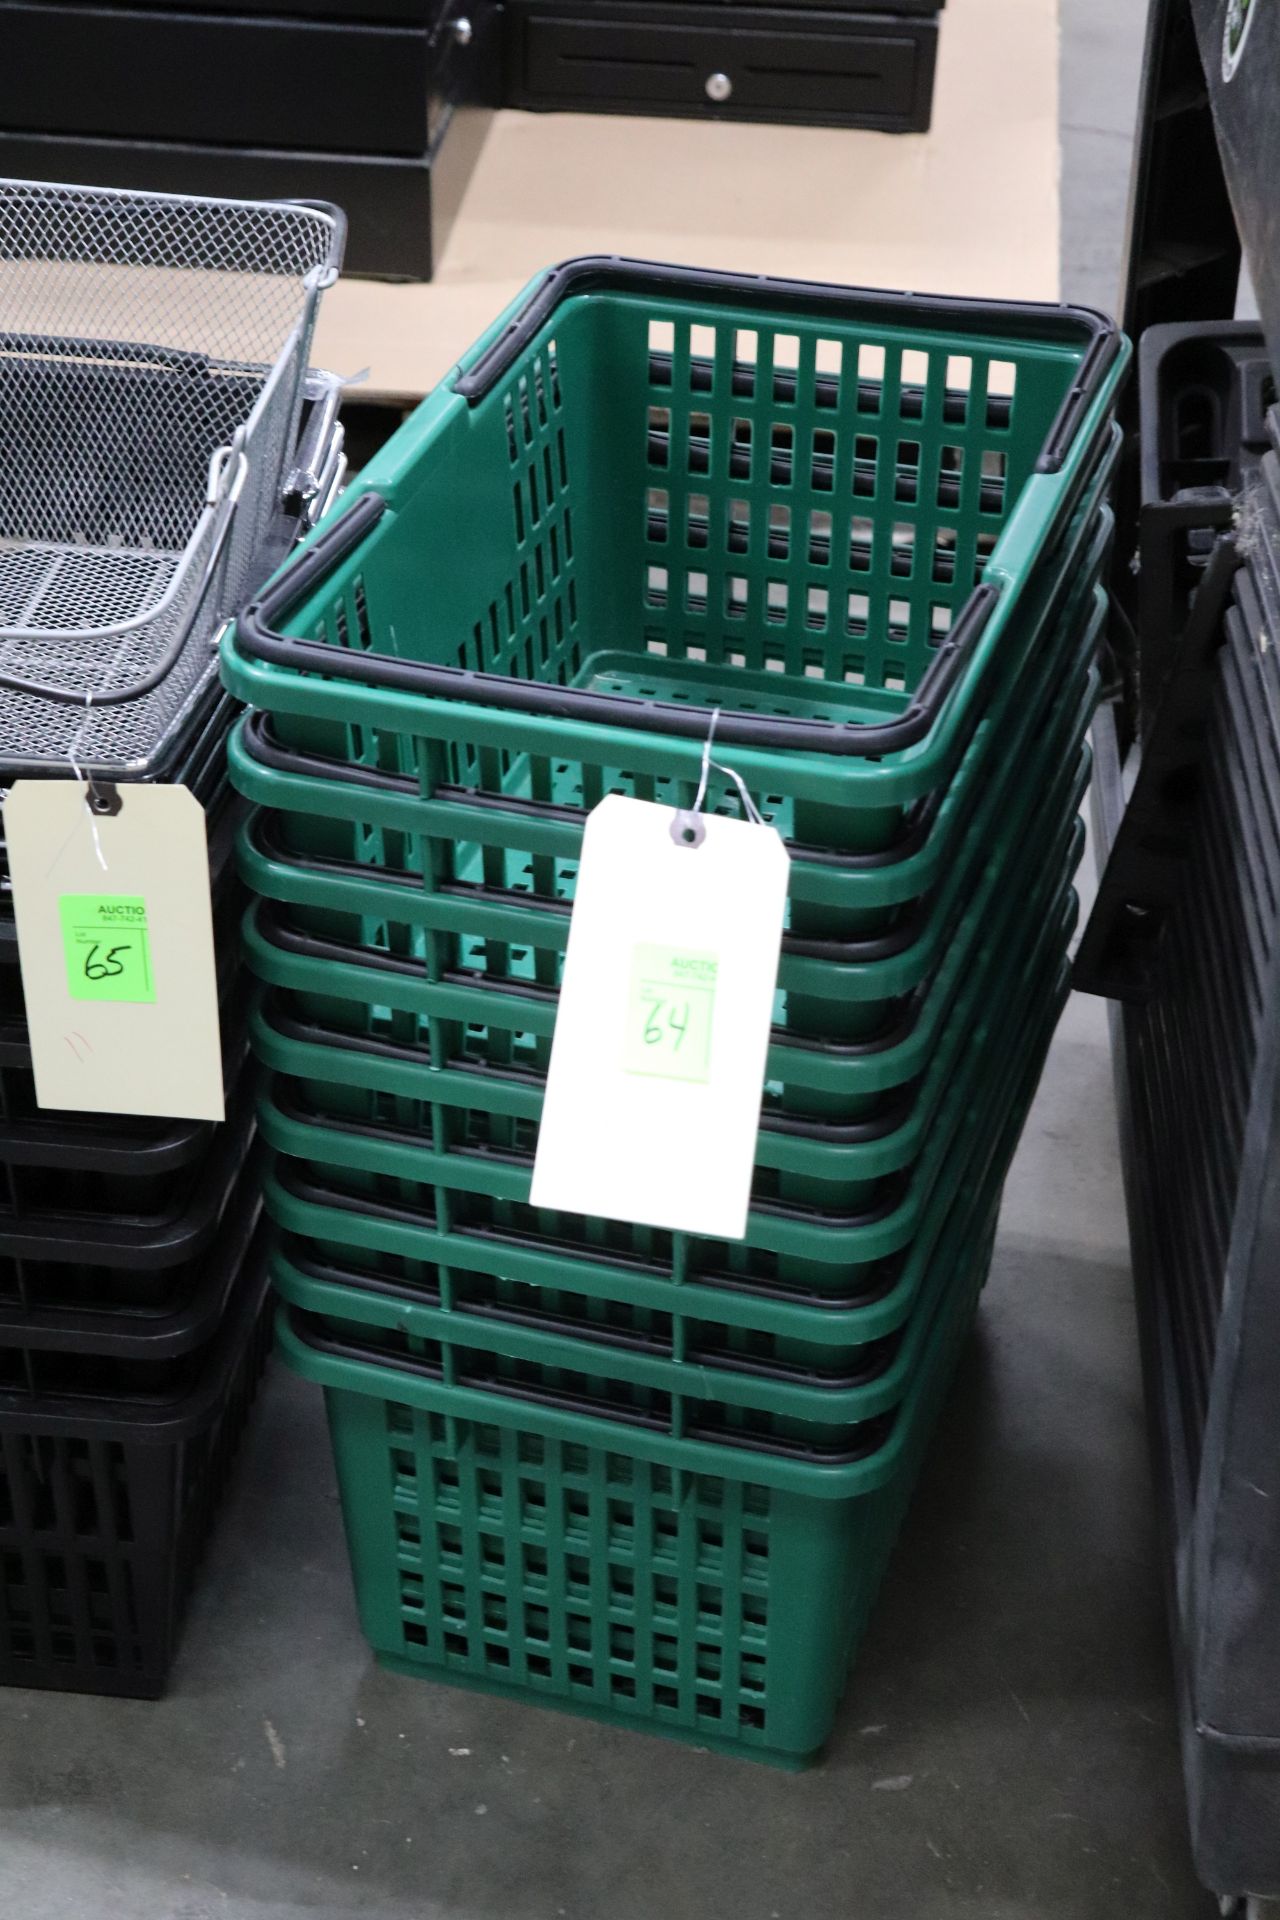 Nine plastic shopping baskets